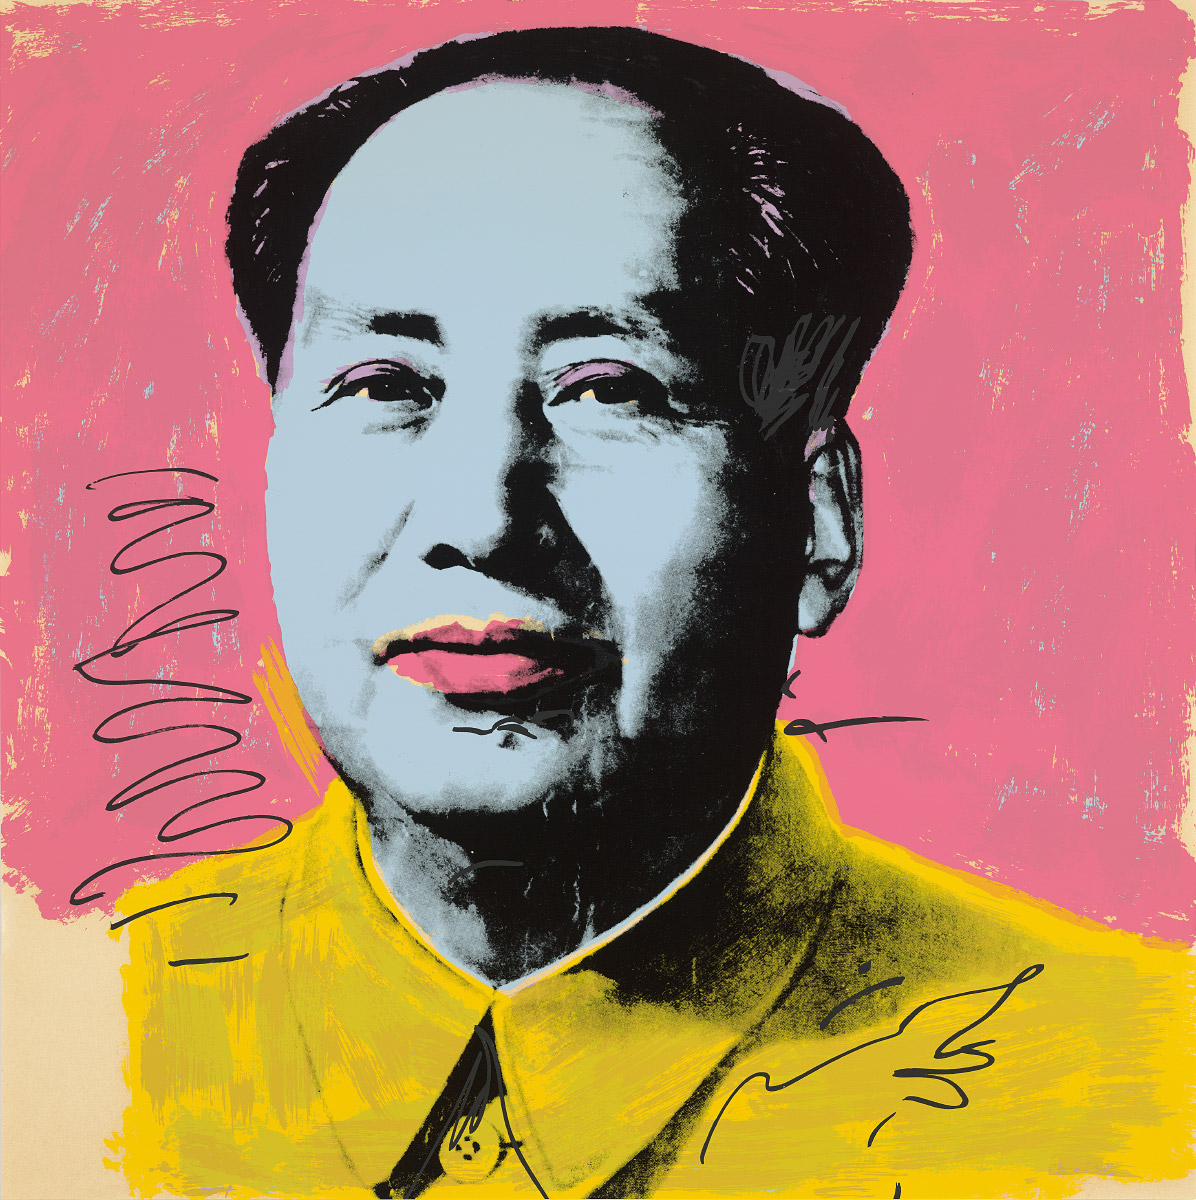 Screenprint of Mao in pink, blue, and orange